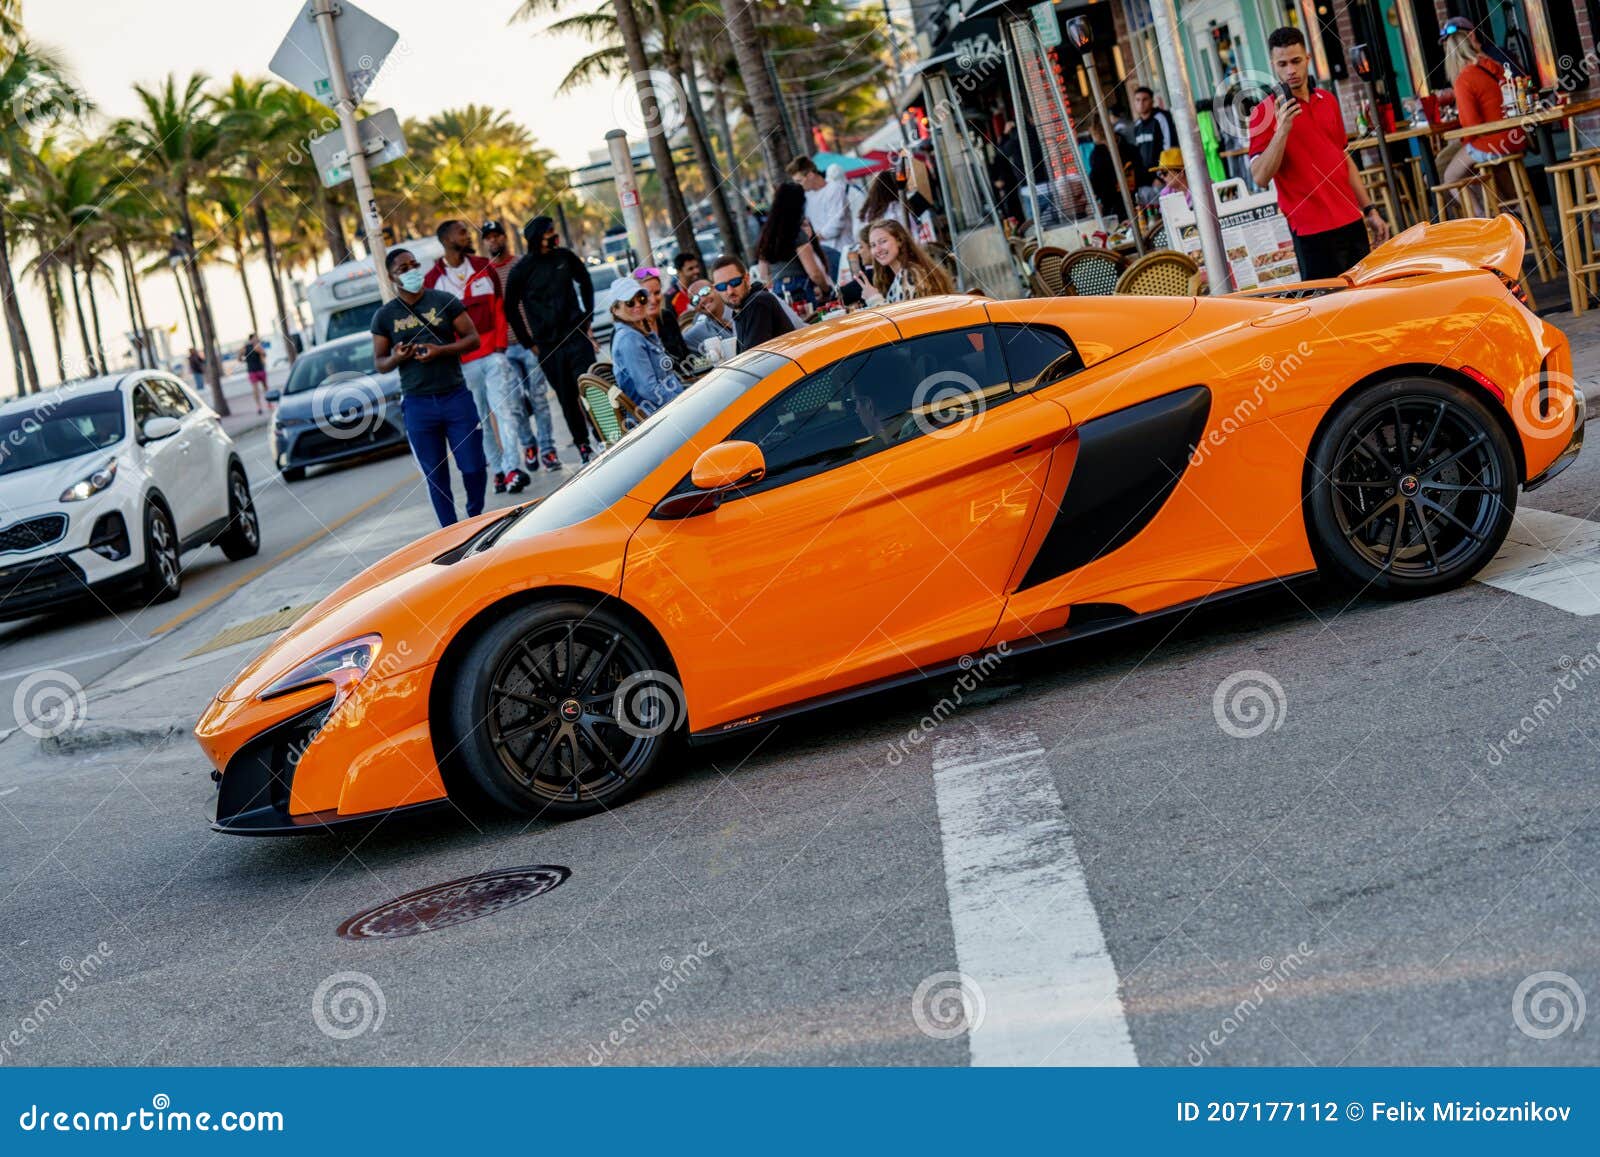 McLaren de corrida feita para as ruas está à venda no Brasil. Mas